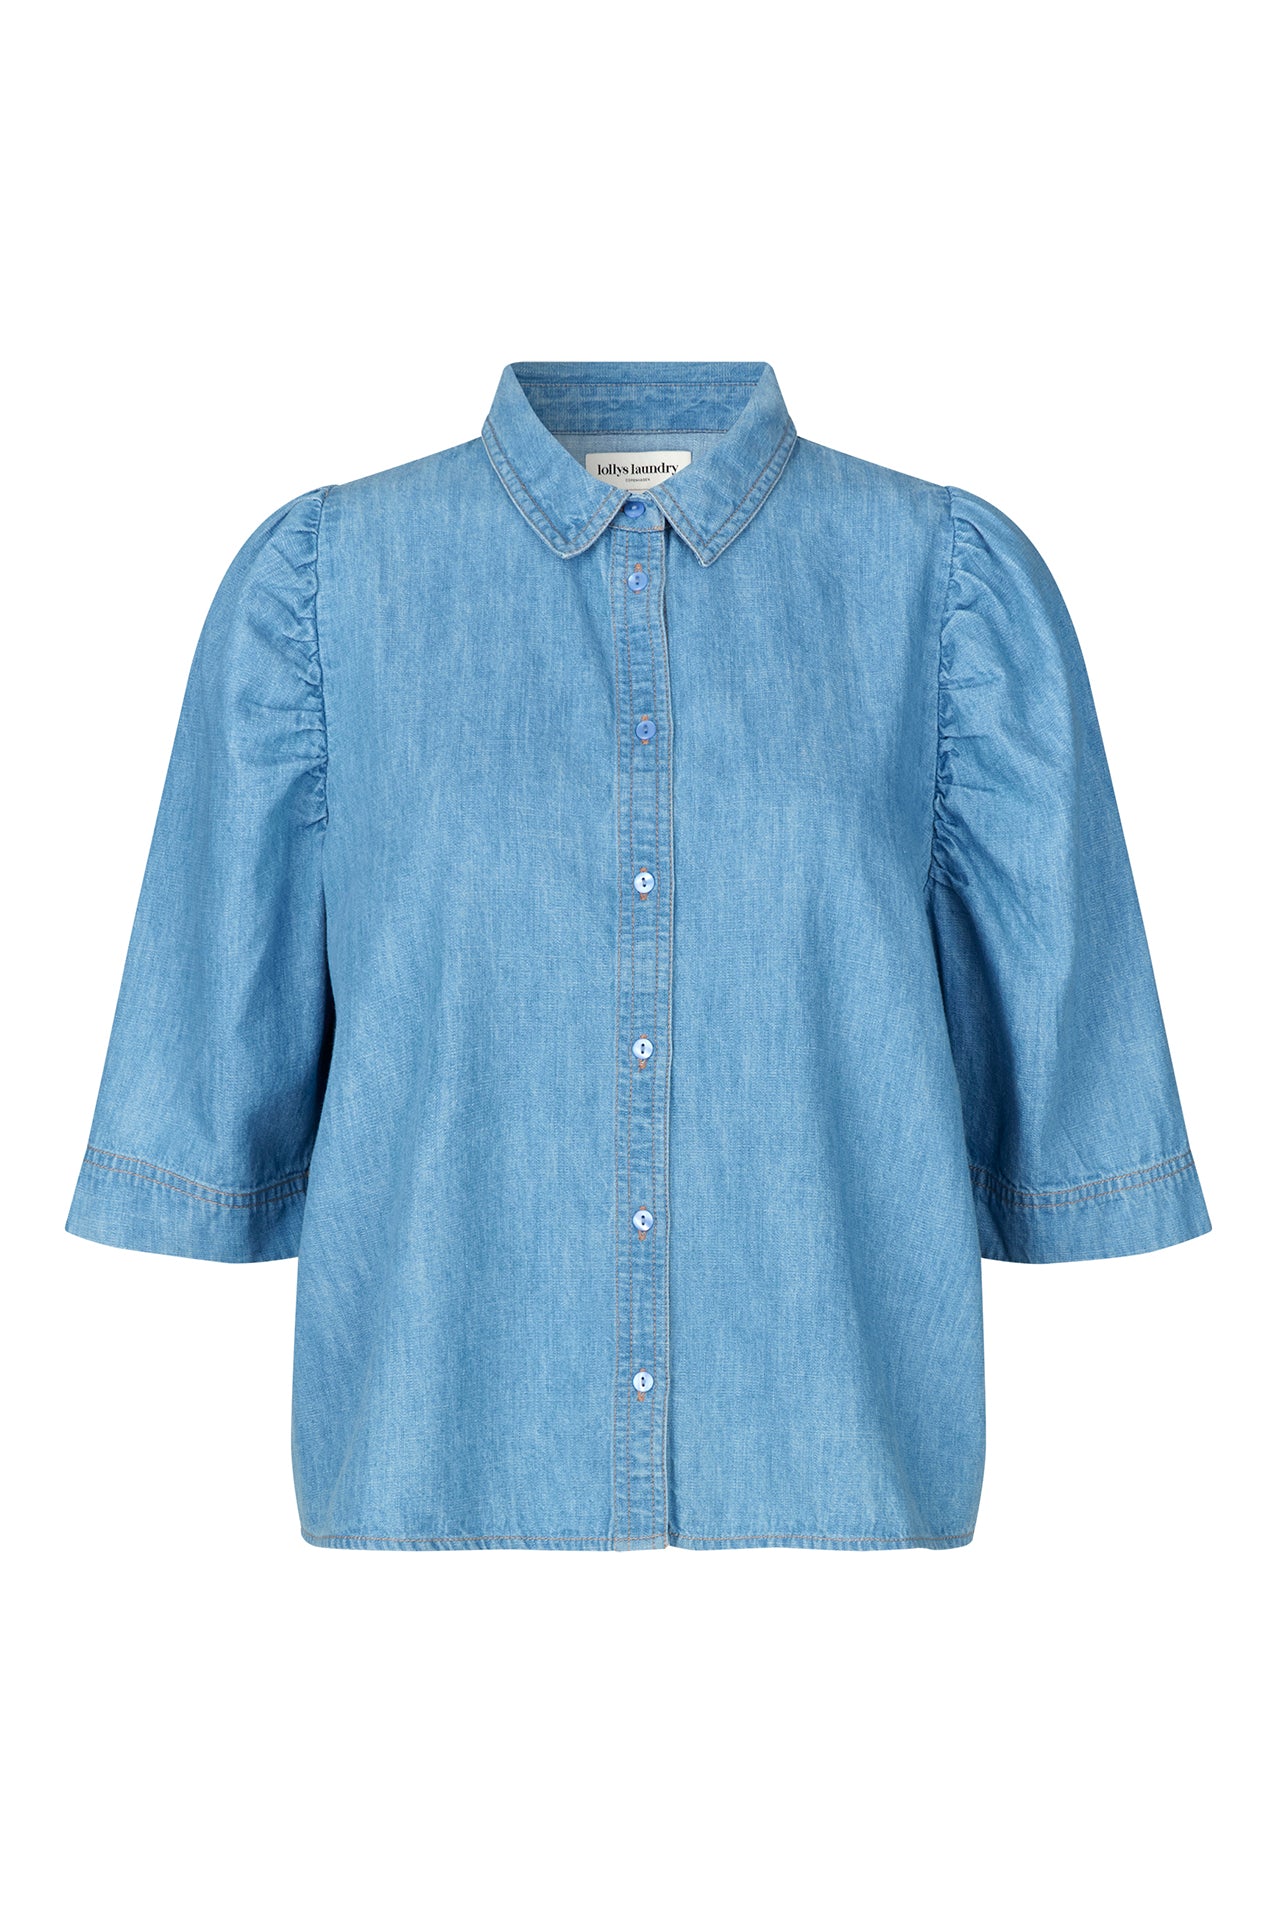 Lollys Laundry BonoLL Shirt SS Shirt 22 Light Blue